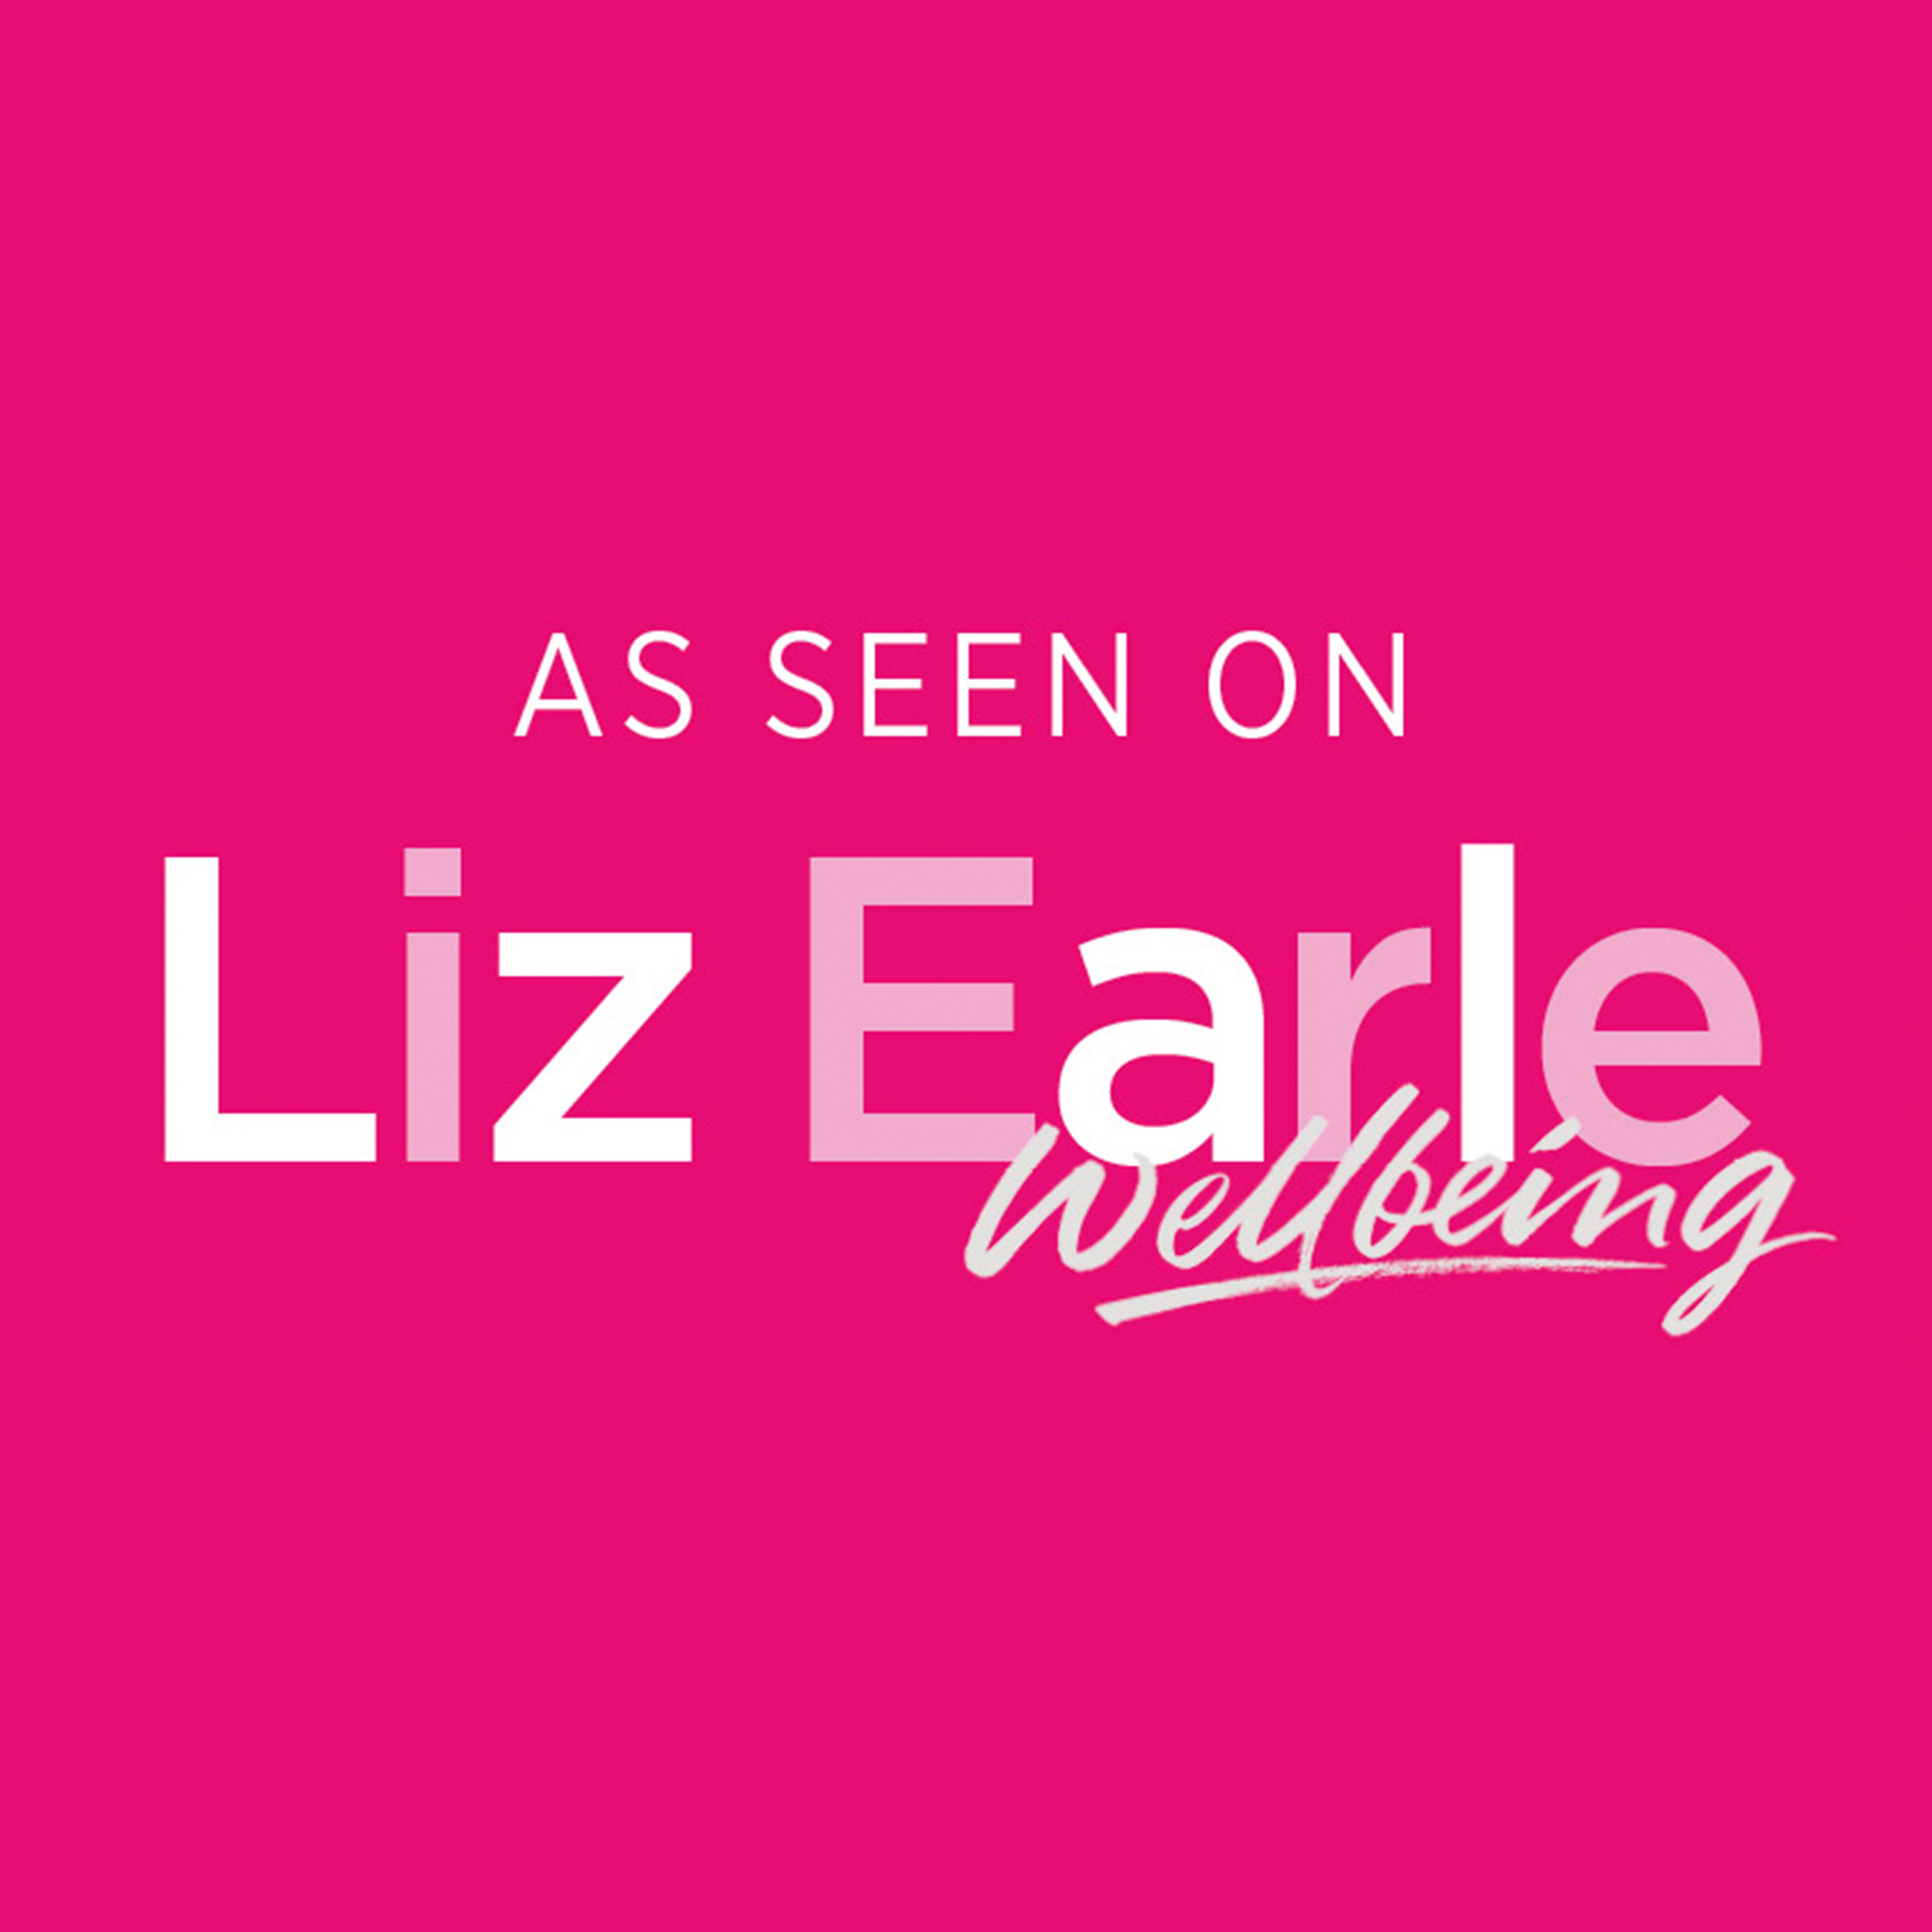 As seen on Liz Earle Wellbeing.